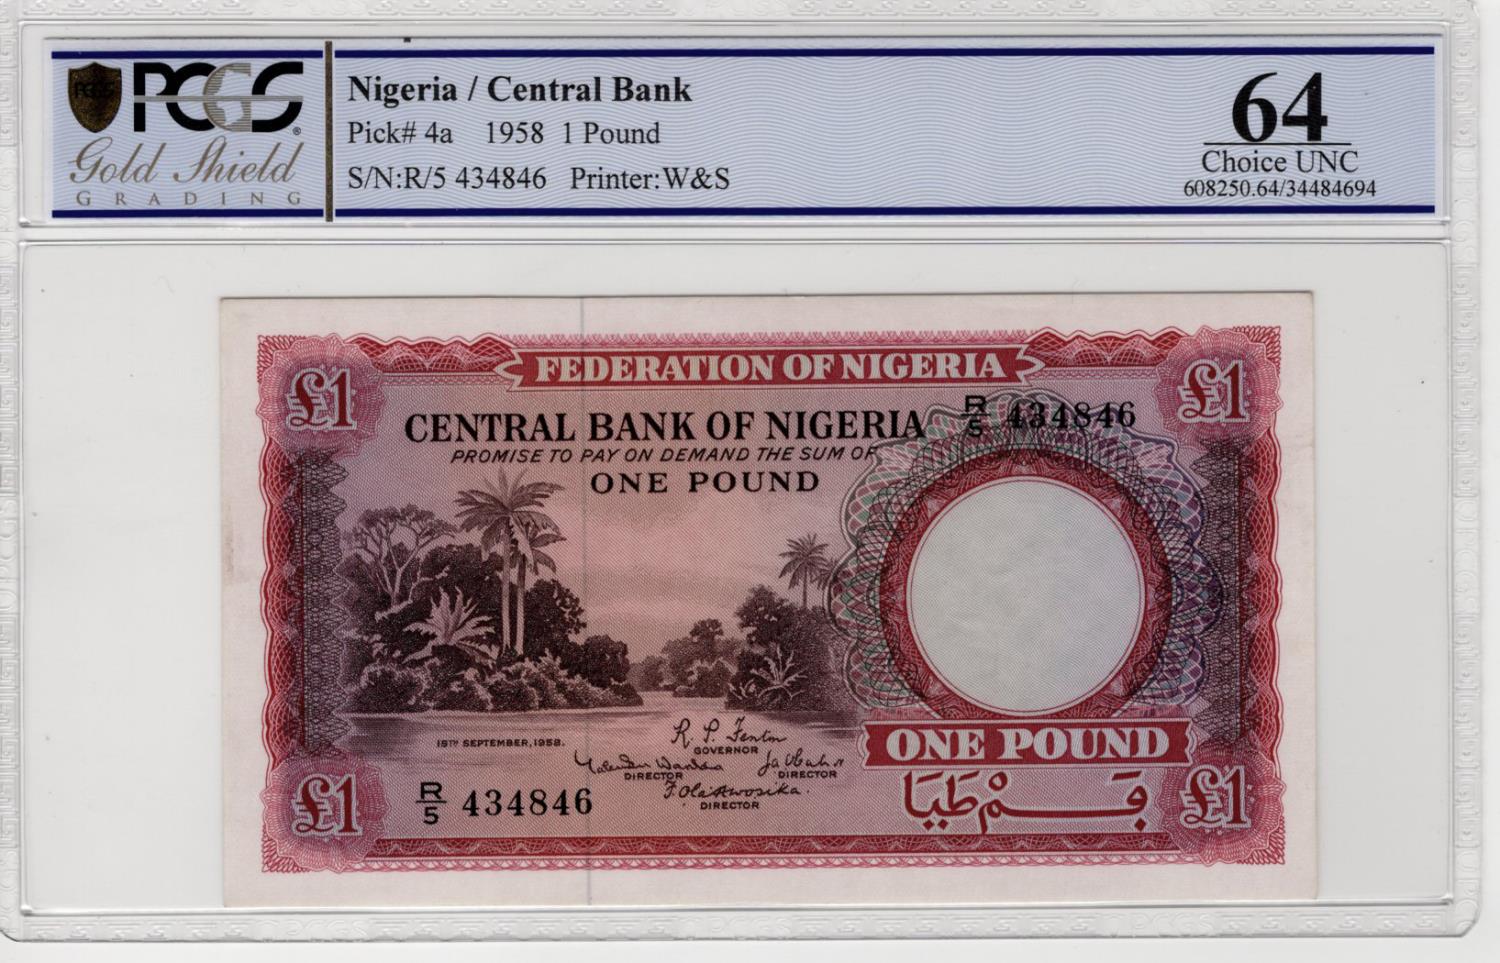 Nigeria 1 Pound dated 19th September 1958, serial R/5 434846, (TBB B203a, Pick4a), PCGS graded 64